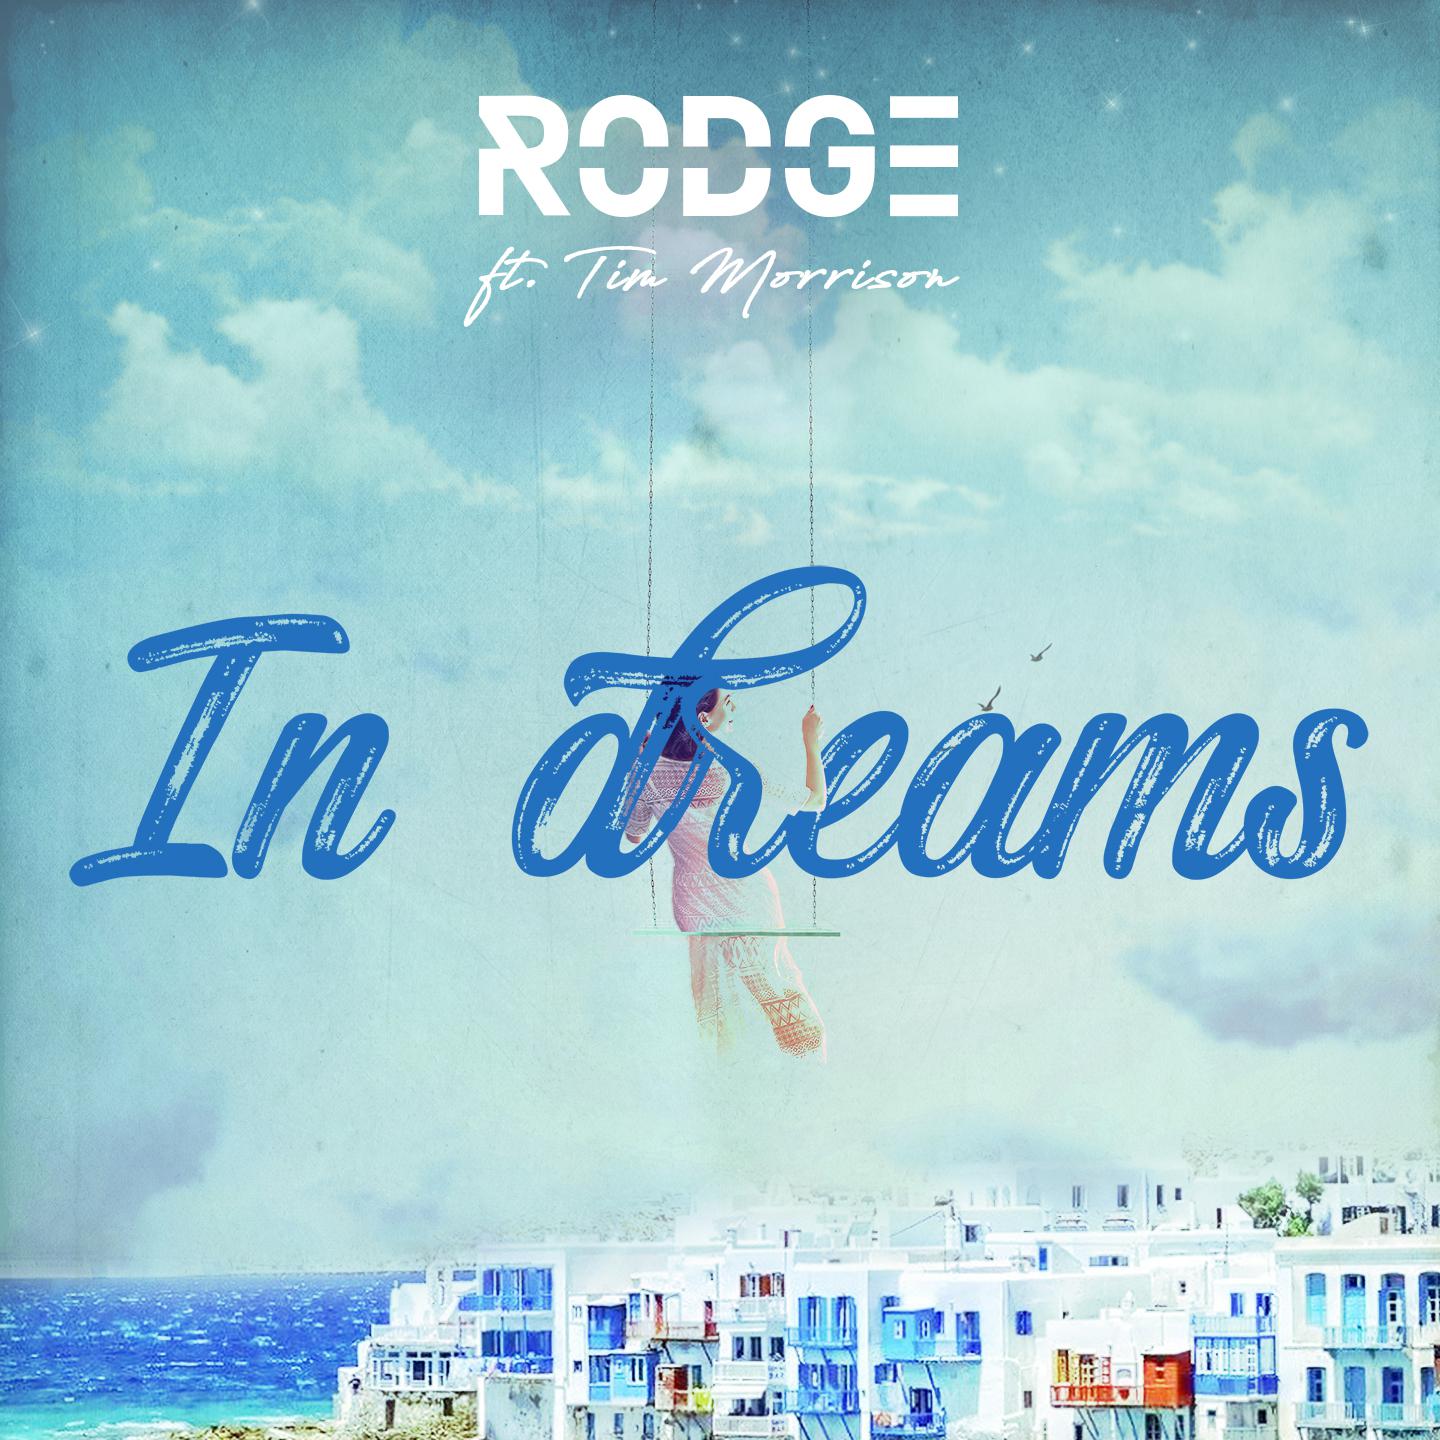 Rodge - In Dreams